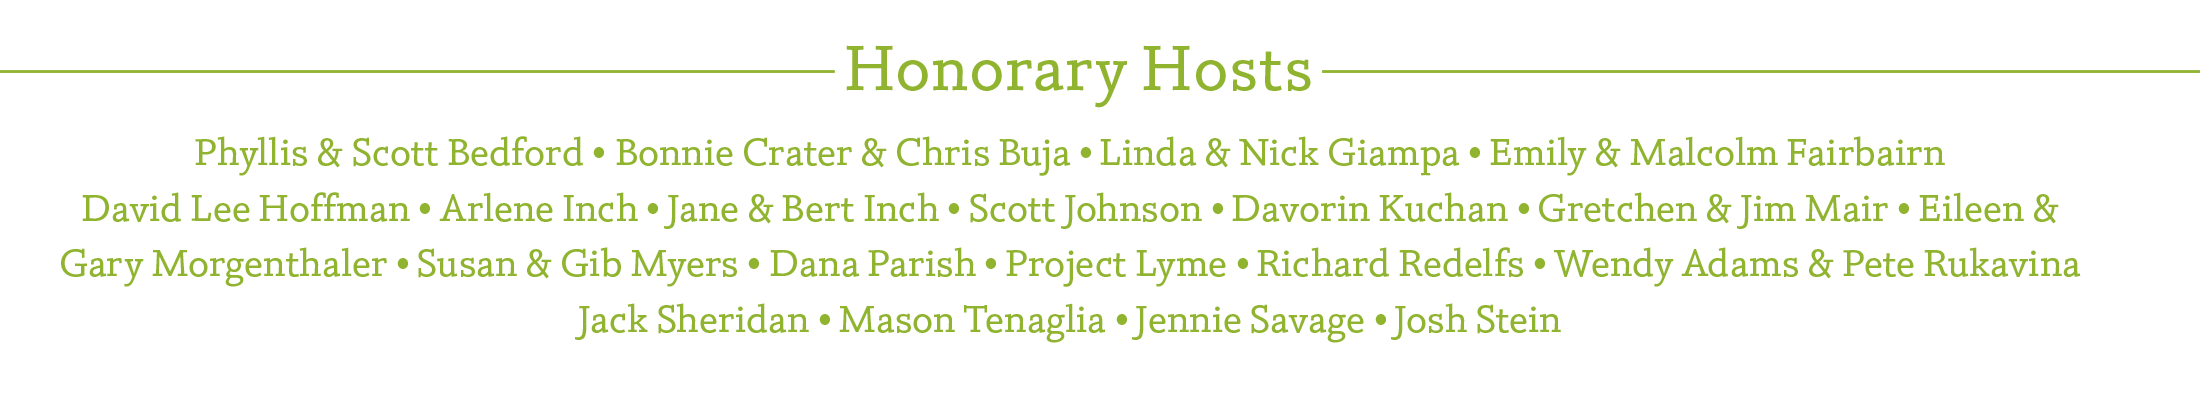 LymeAid 2021 honorary hosts